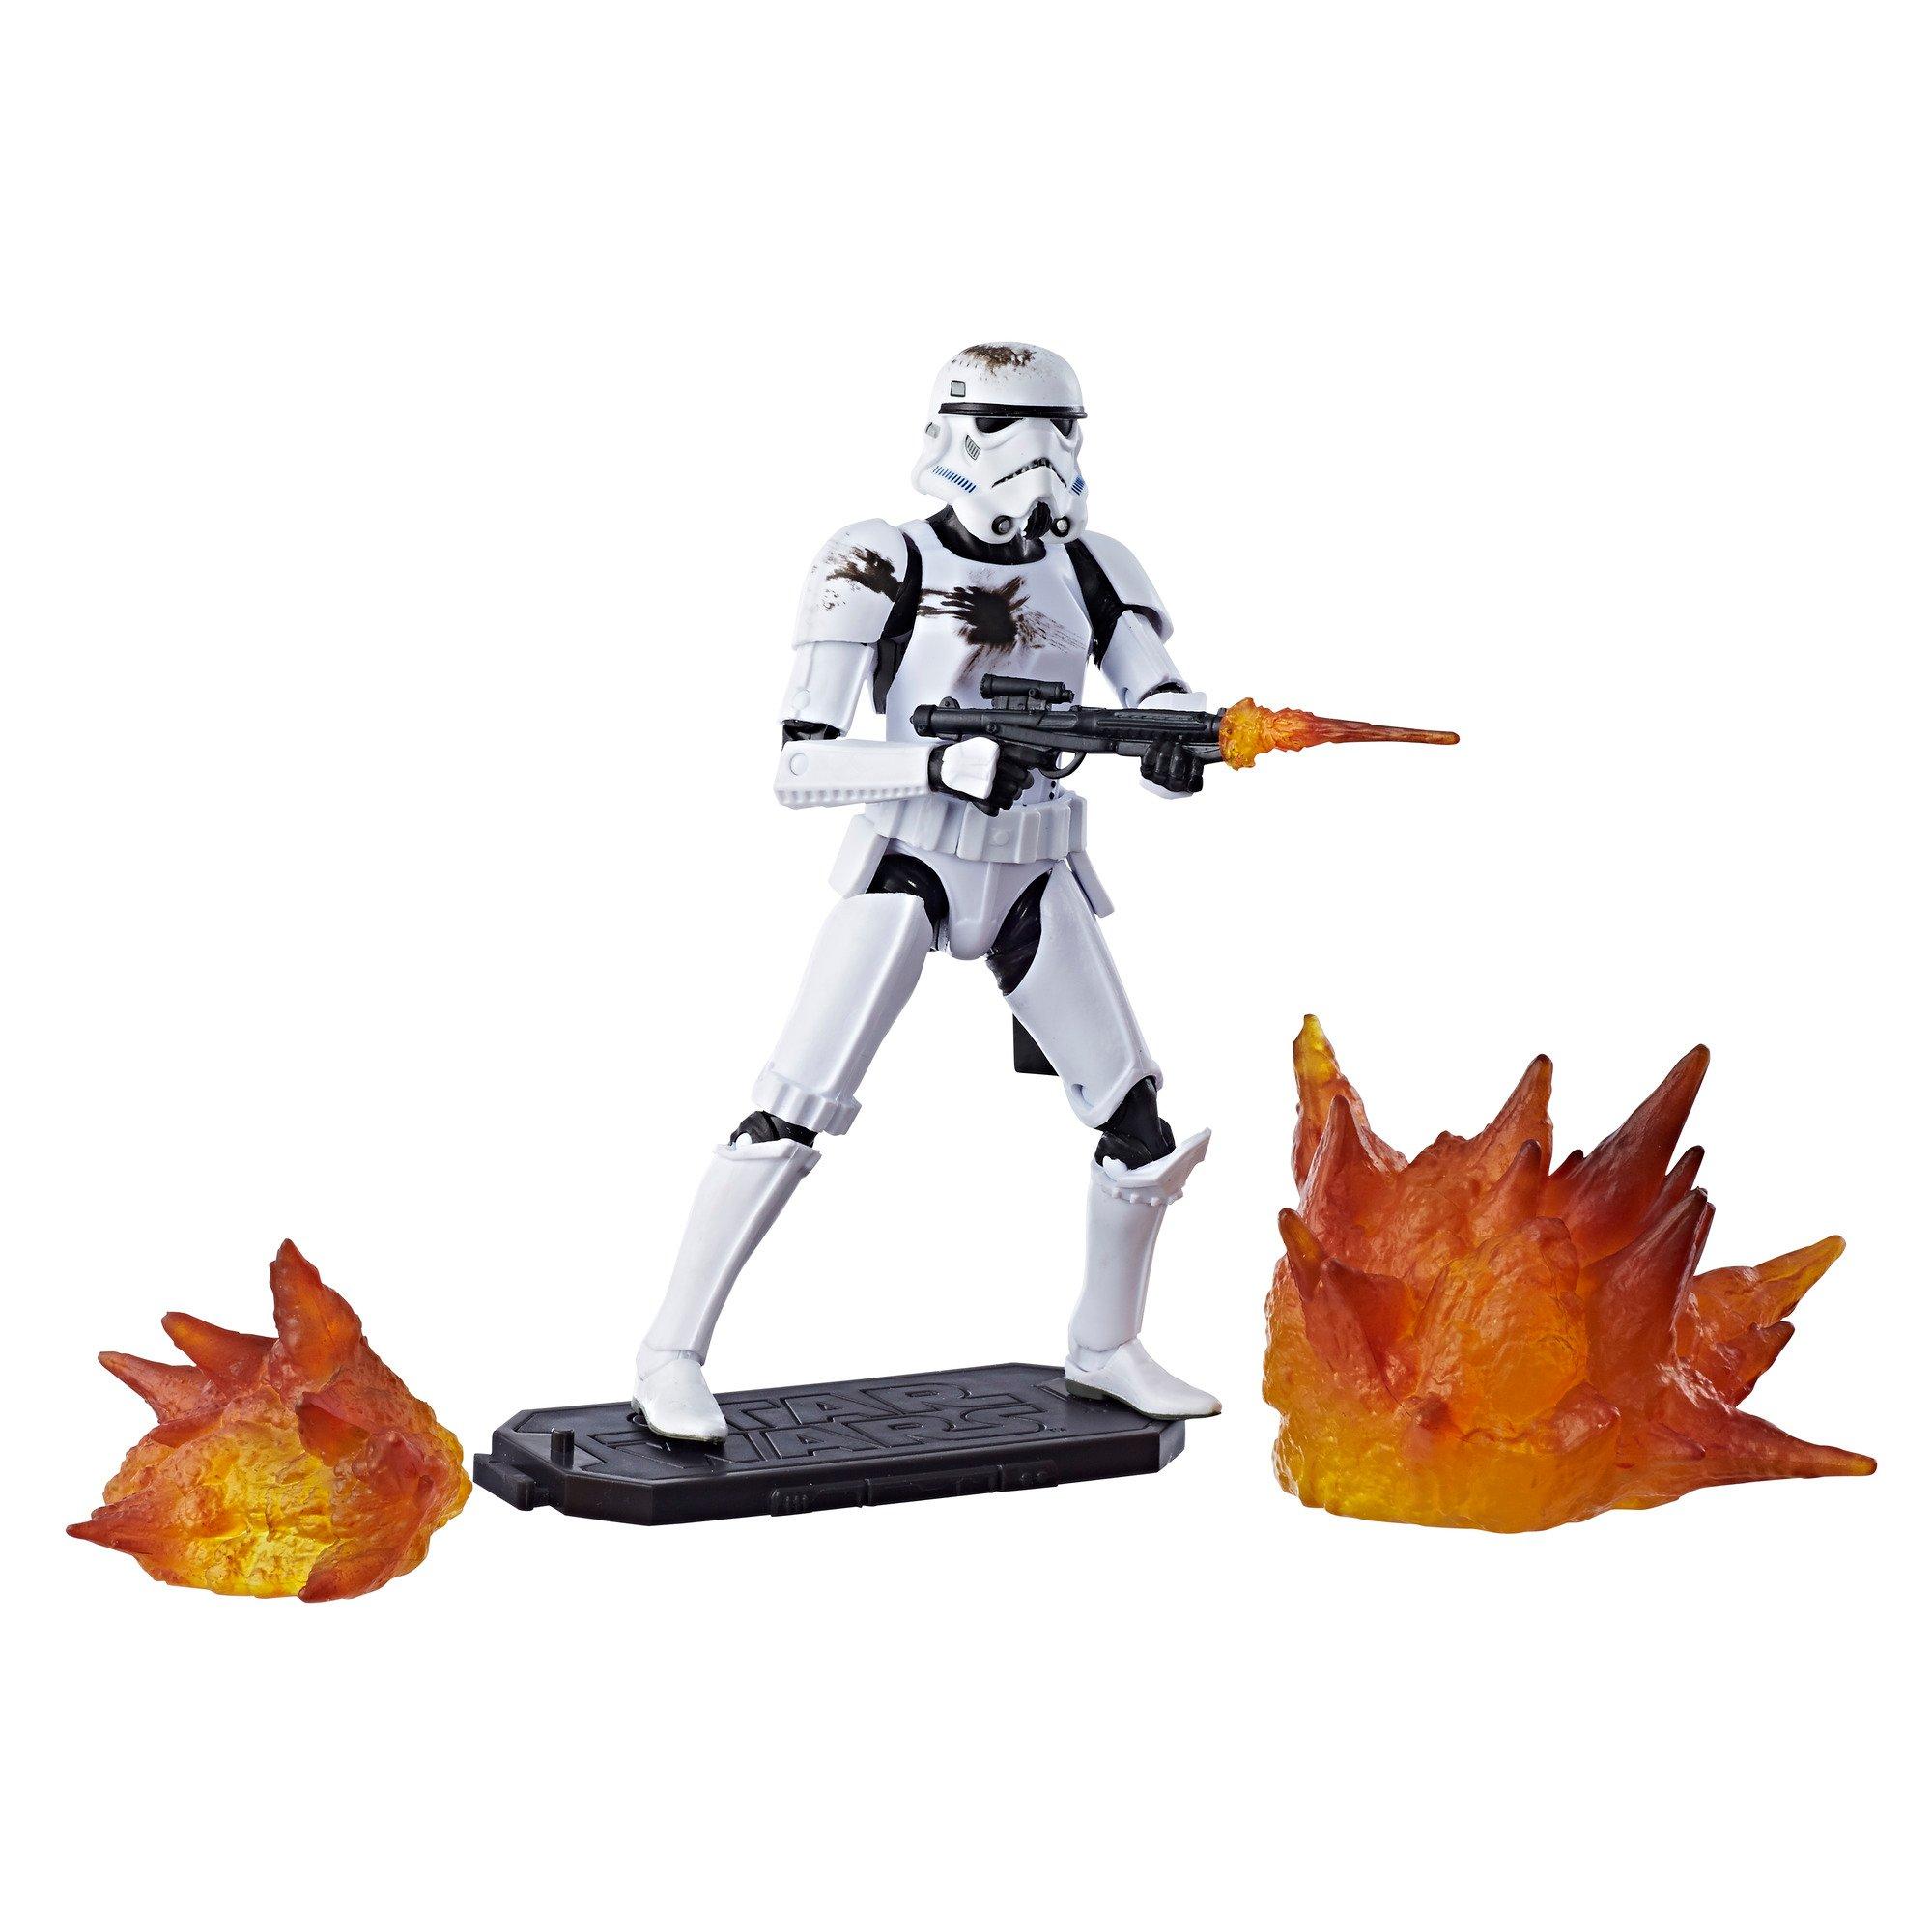 Hasbro Star Wars The Black Series Stormtrooper 13 Action Figure for sale online